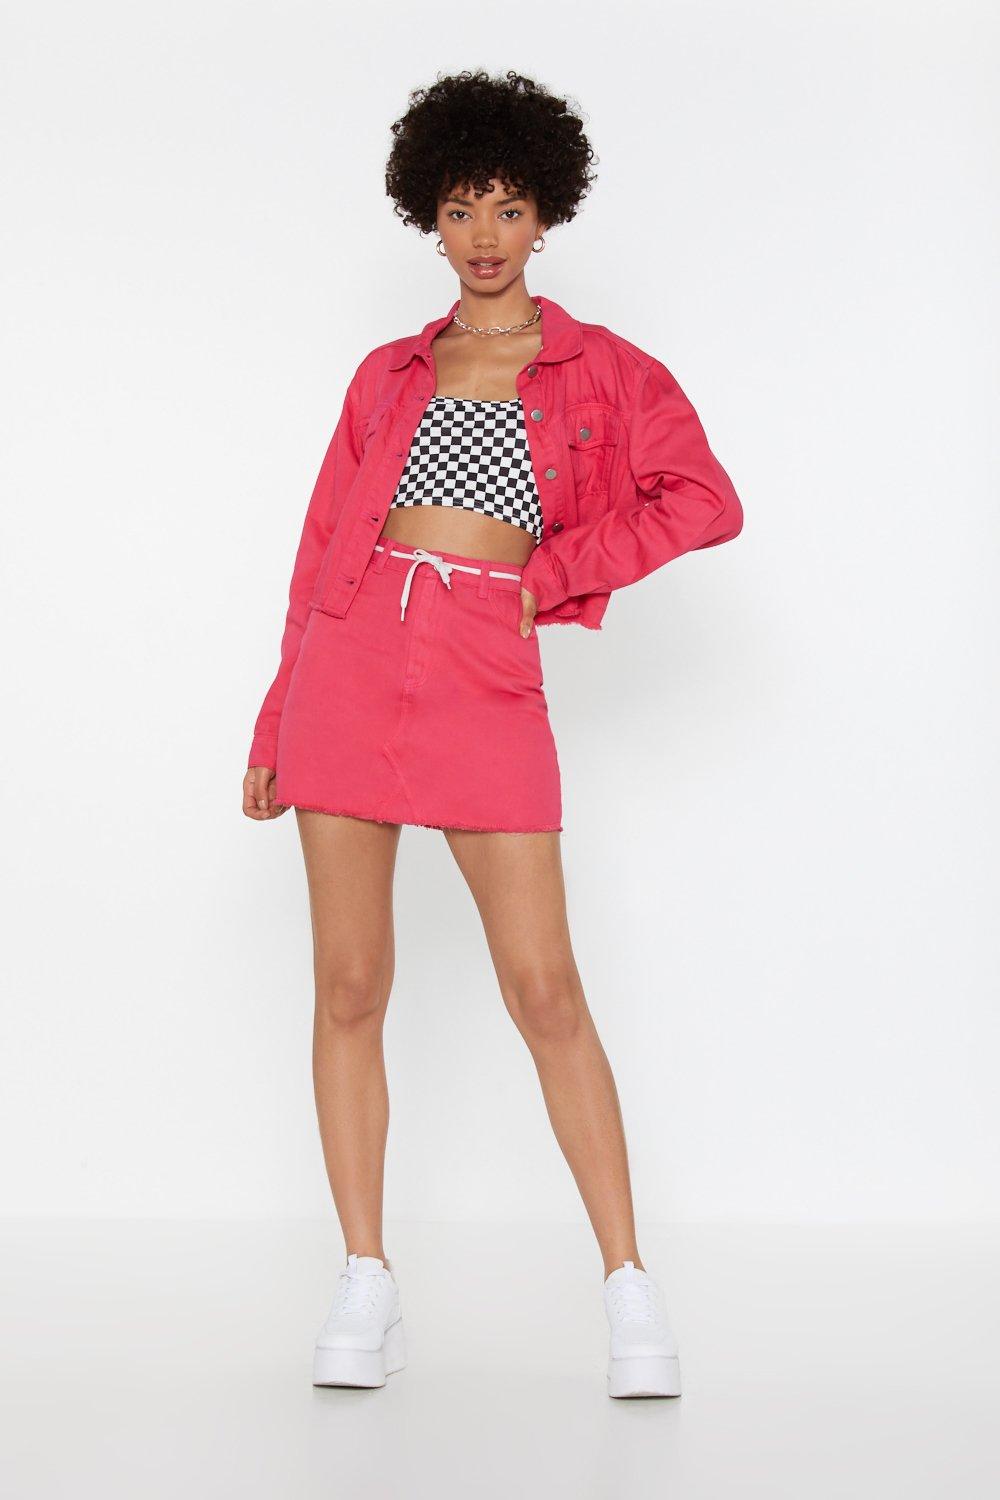 pink denim jacket and skirt